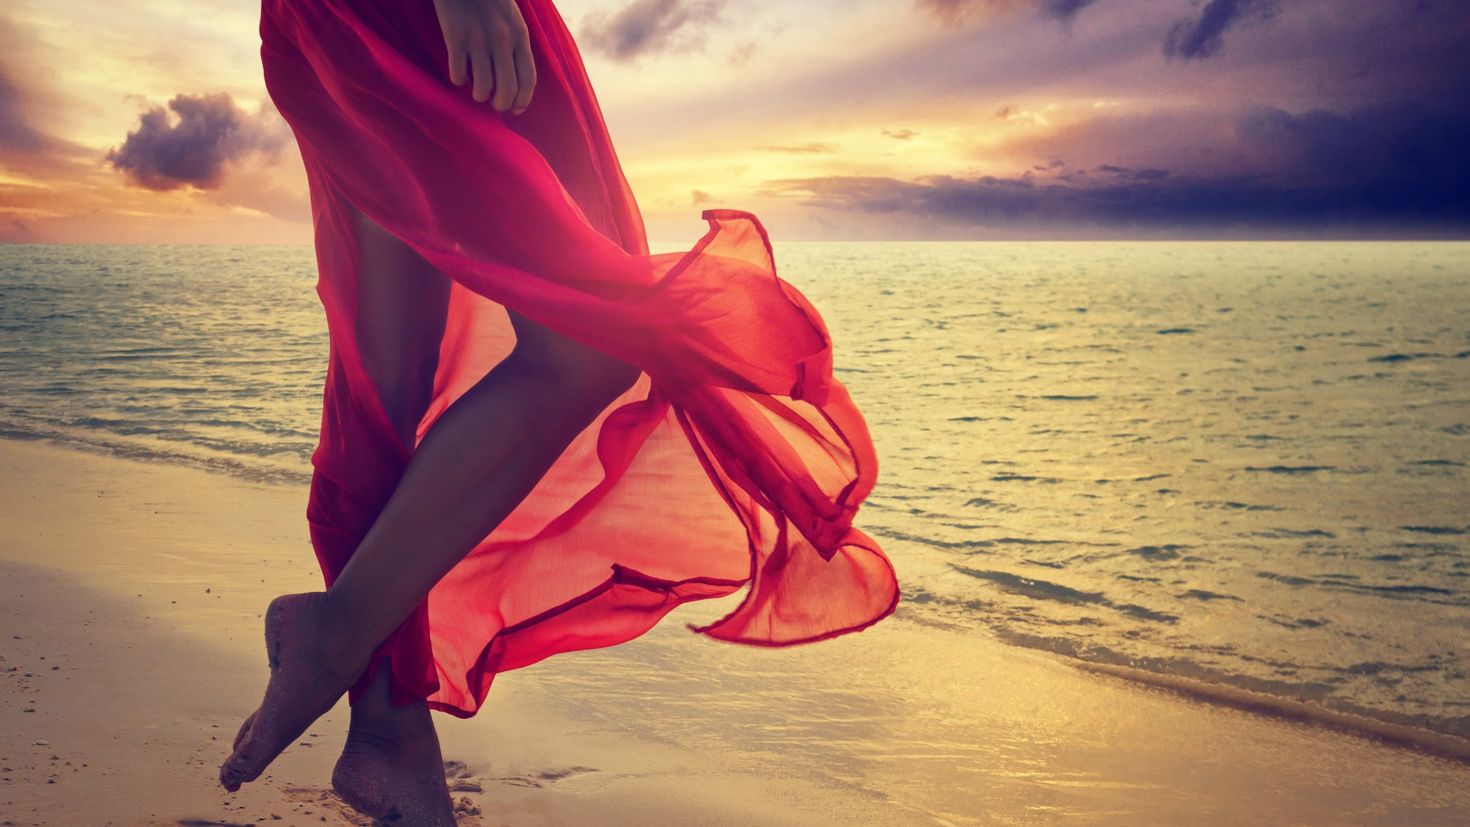 Песня наше лето закаты. Девушка-море. Девушка в Красном платье на море. Девушка в Красном платье на пляже. Красивые девушки на море.